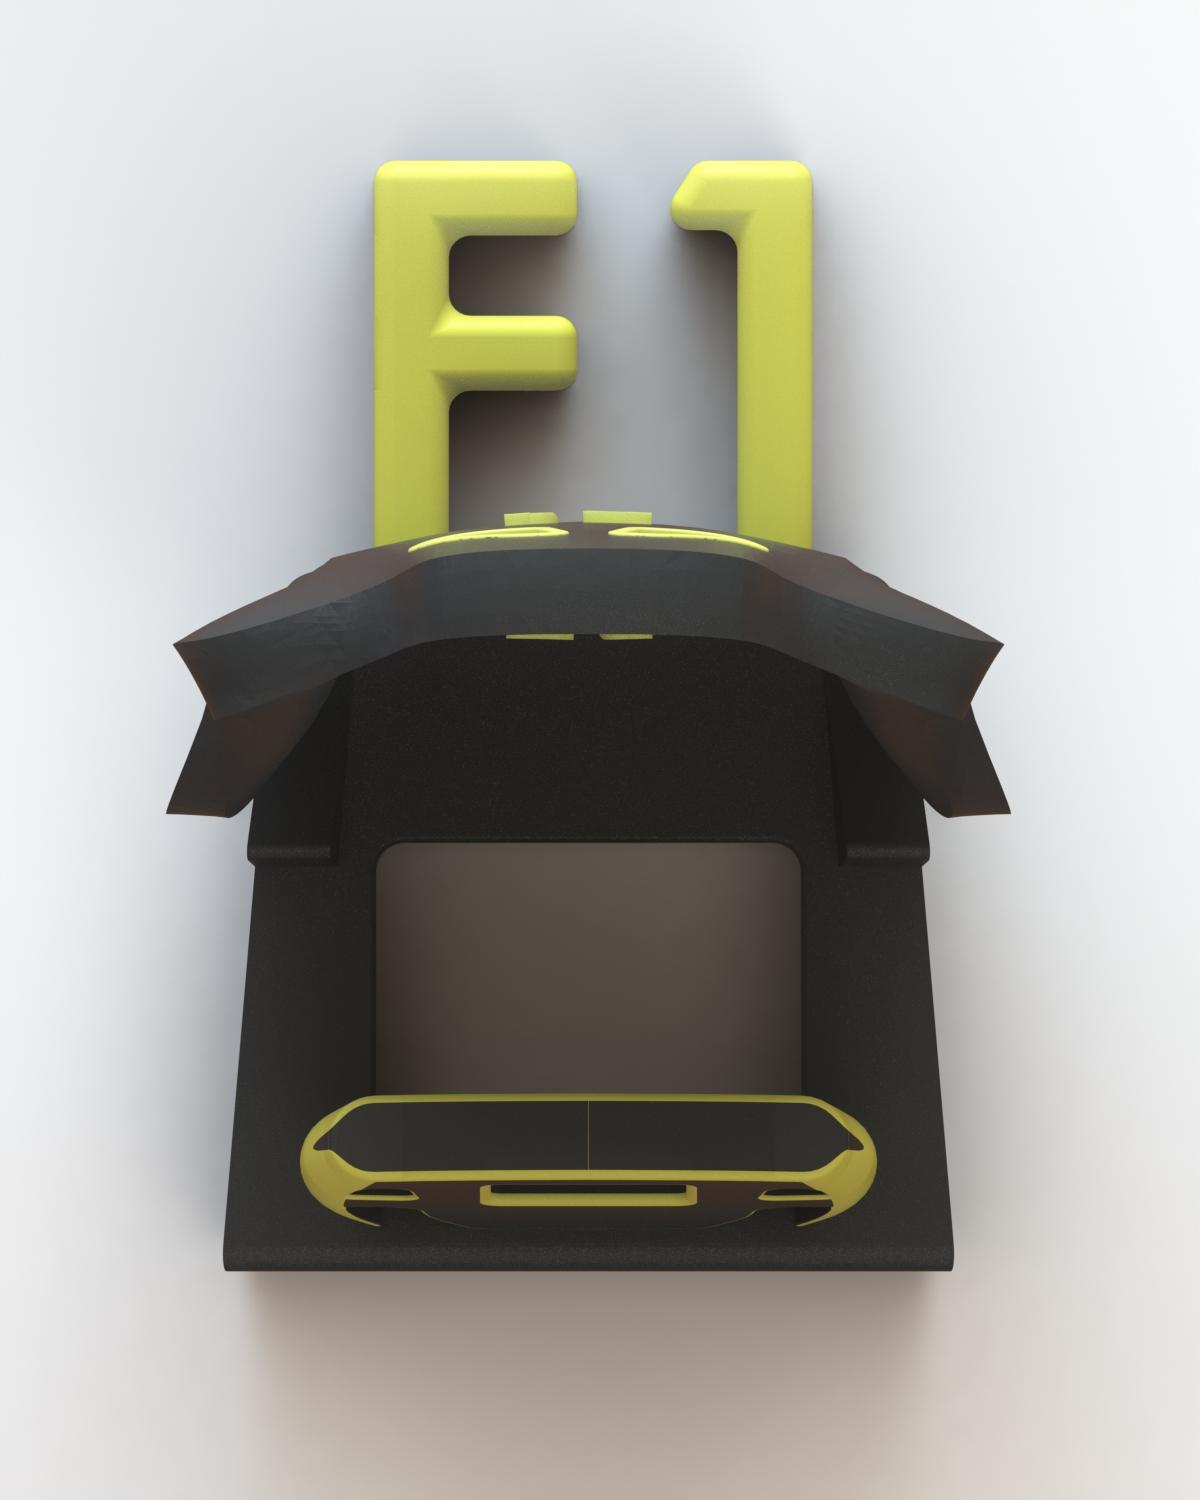 F1 Chair phone holder 3d model